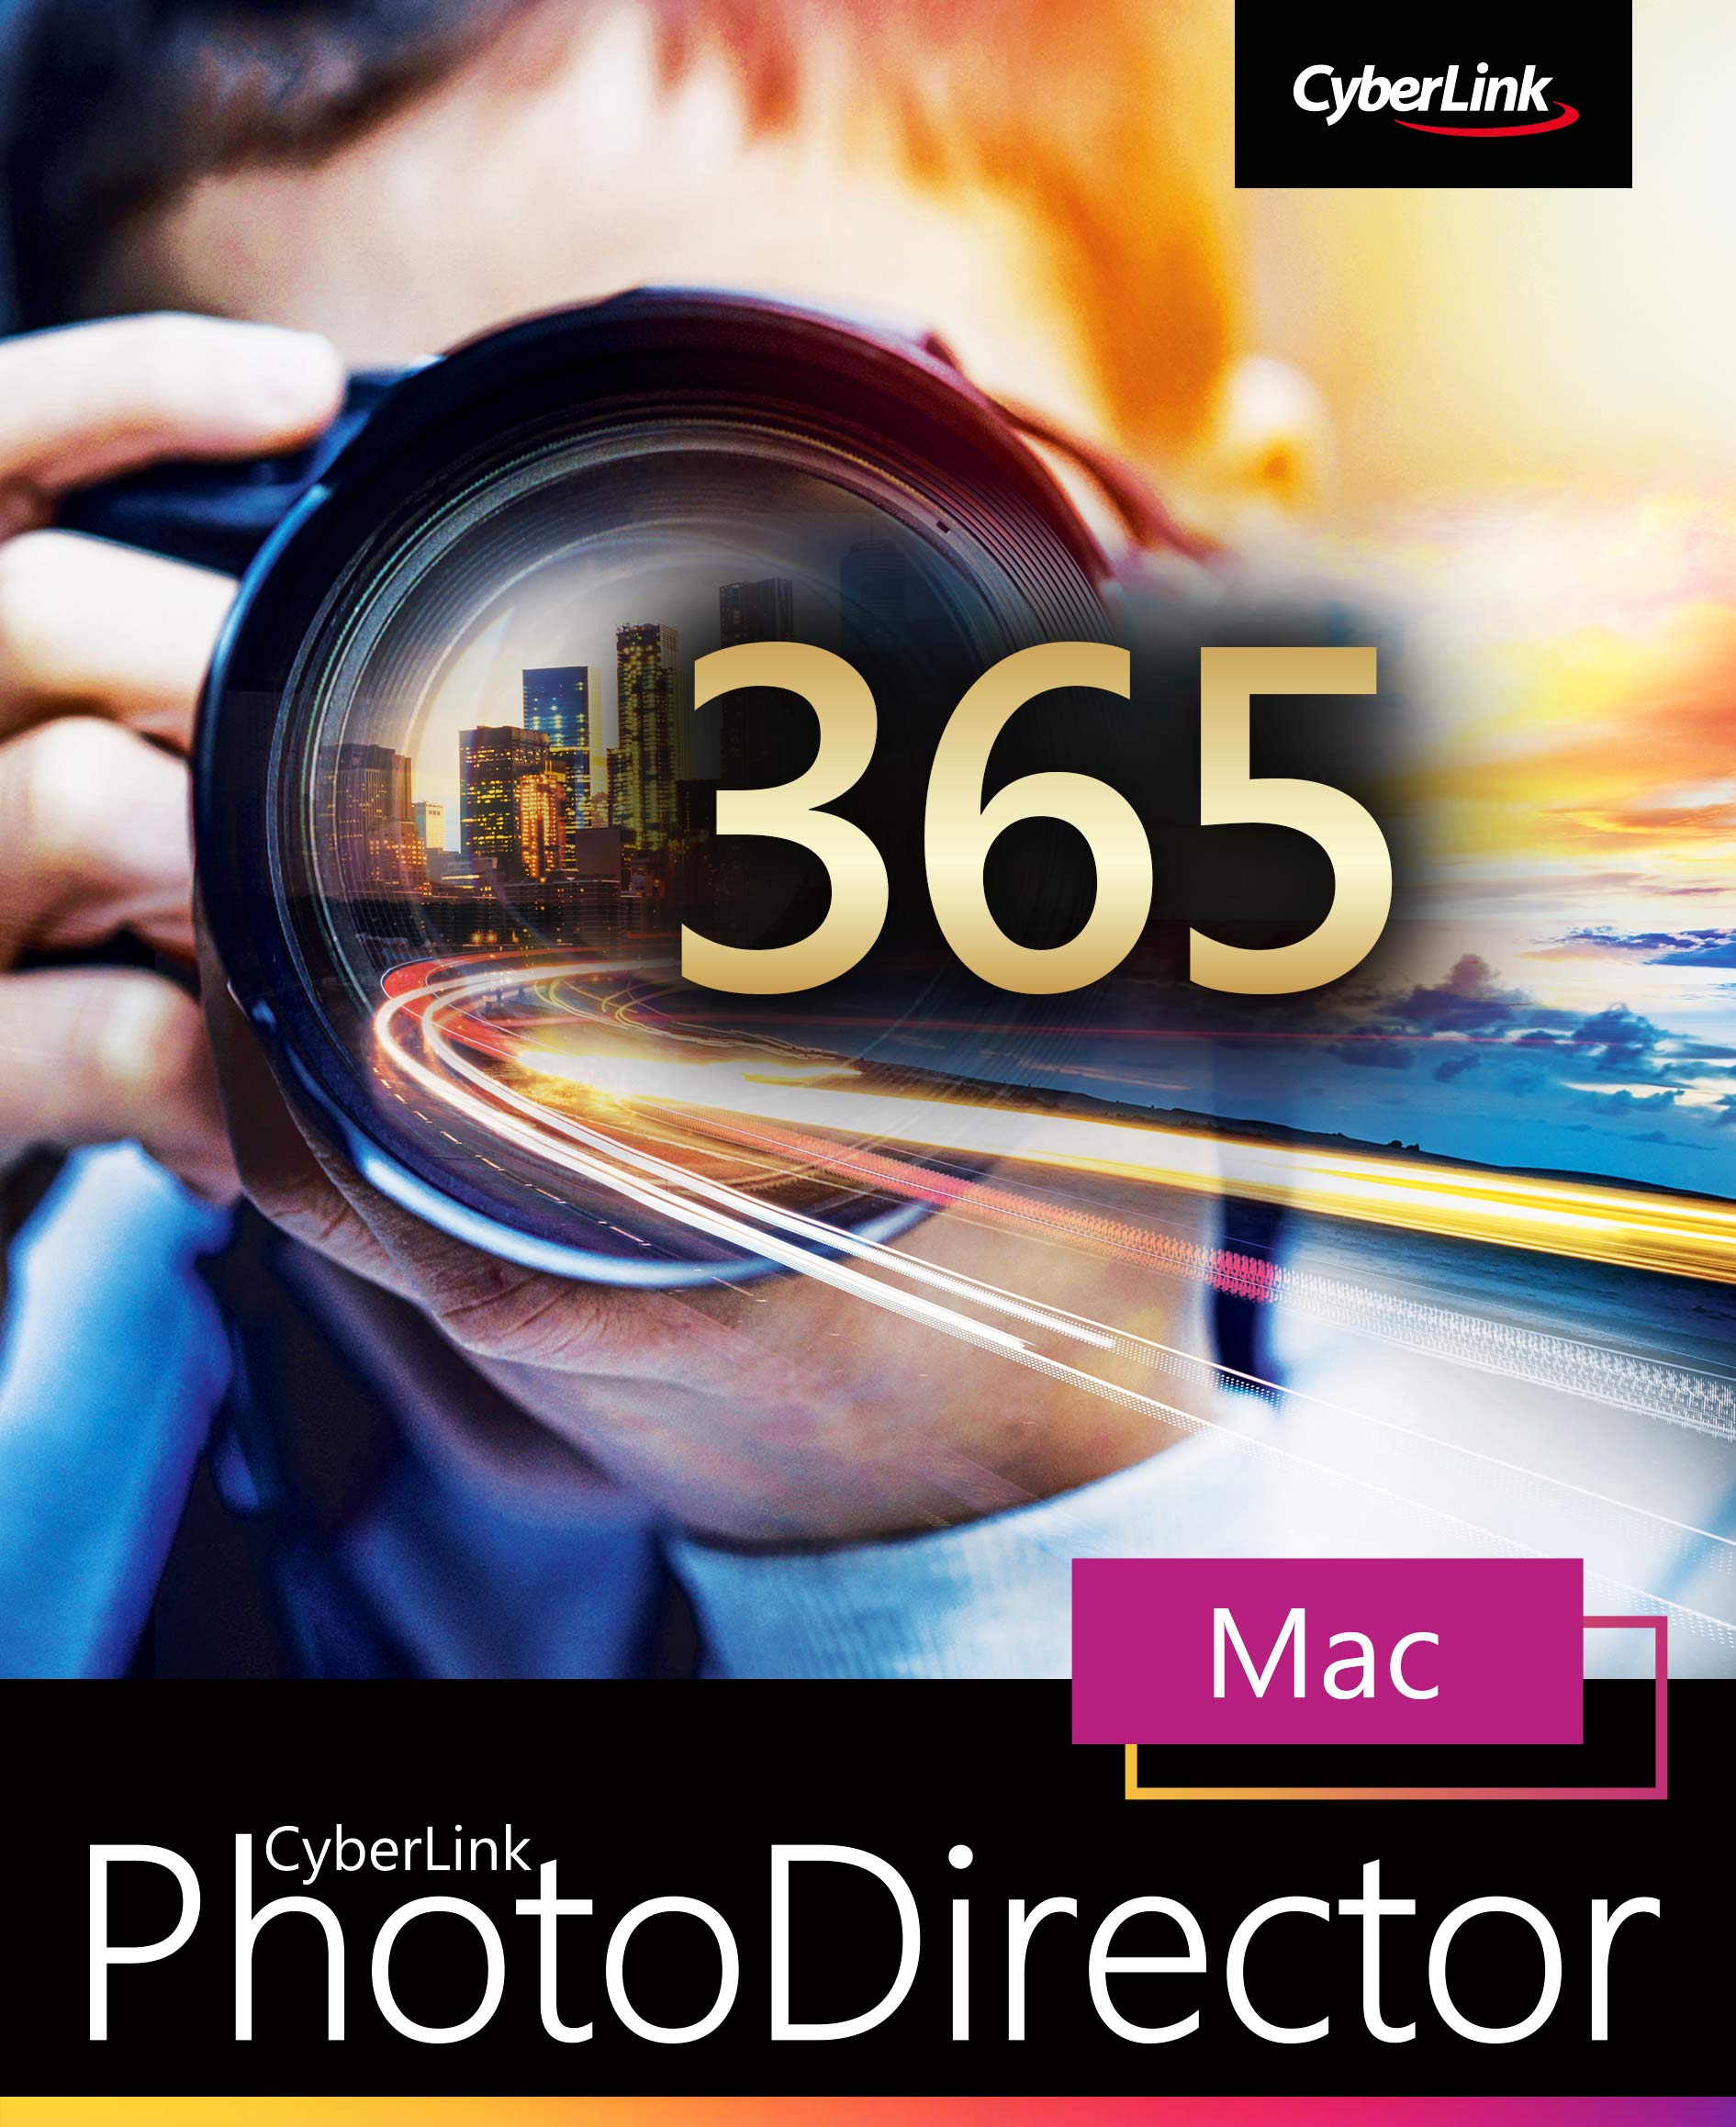 PhotoDirector 365 - Mac